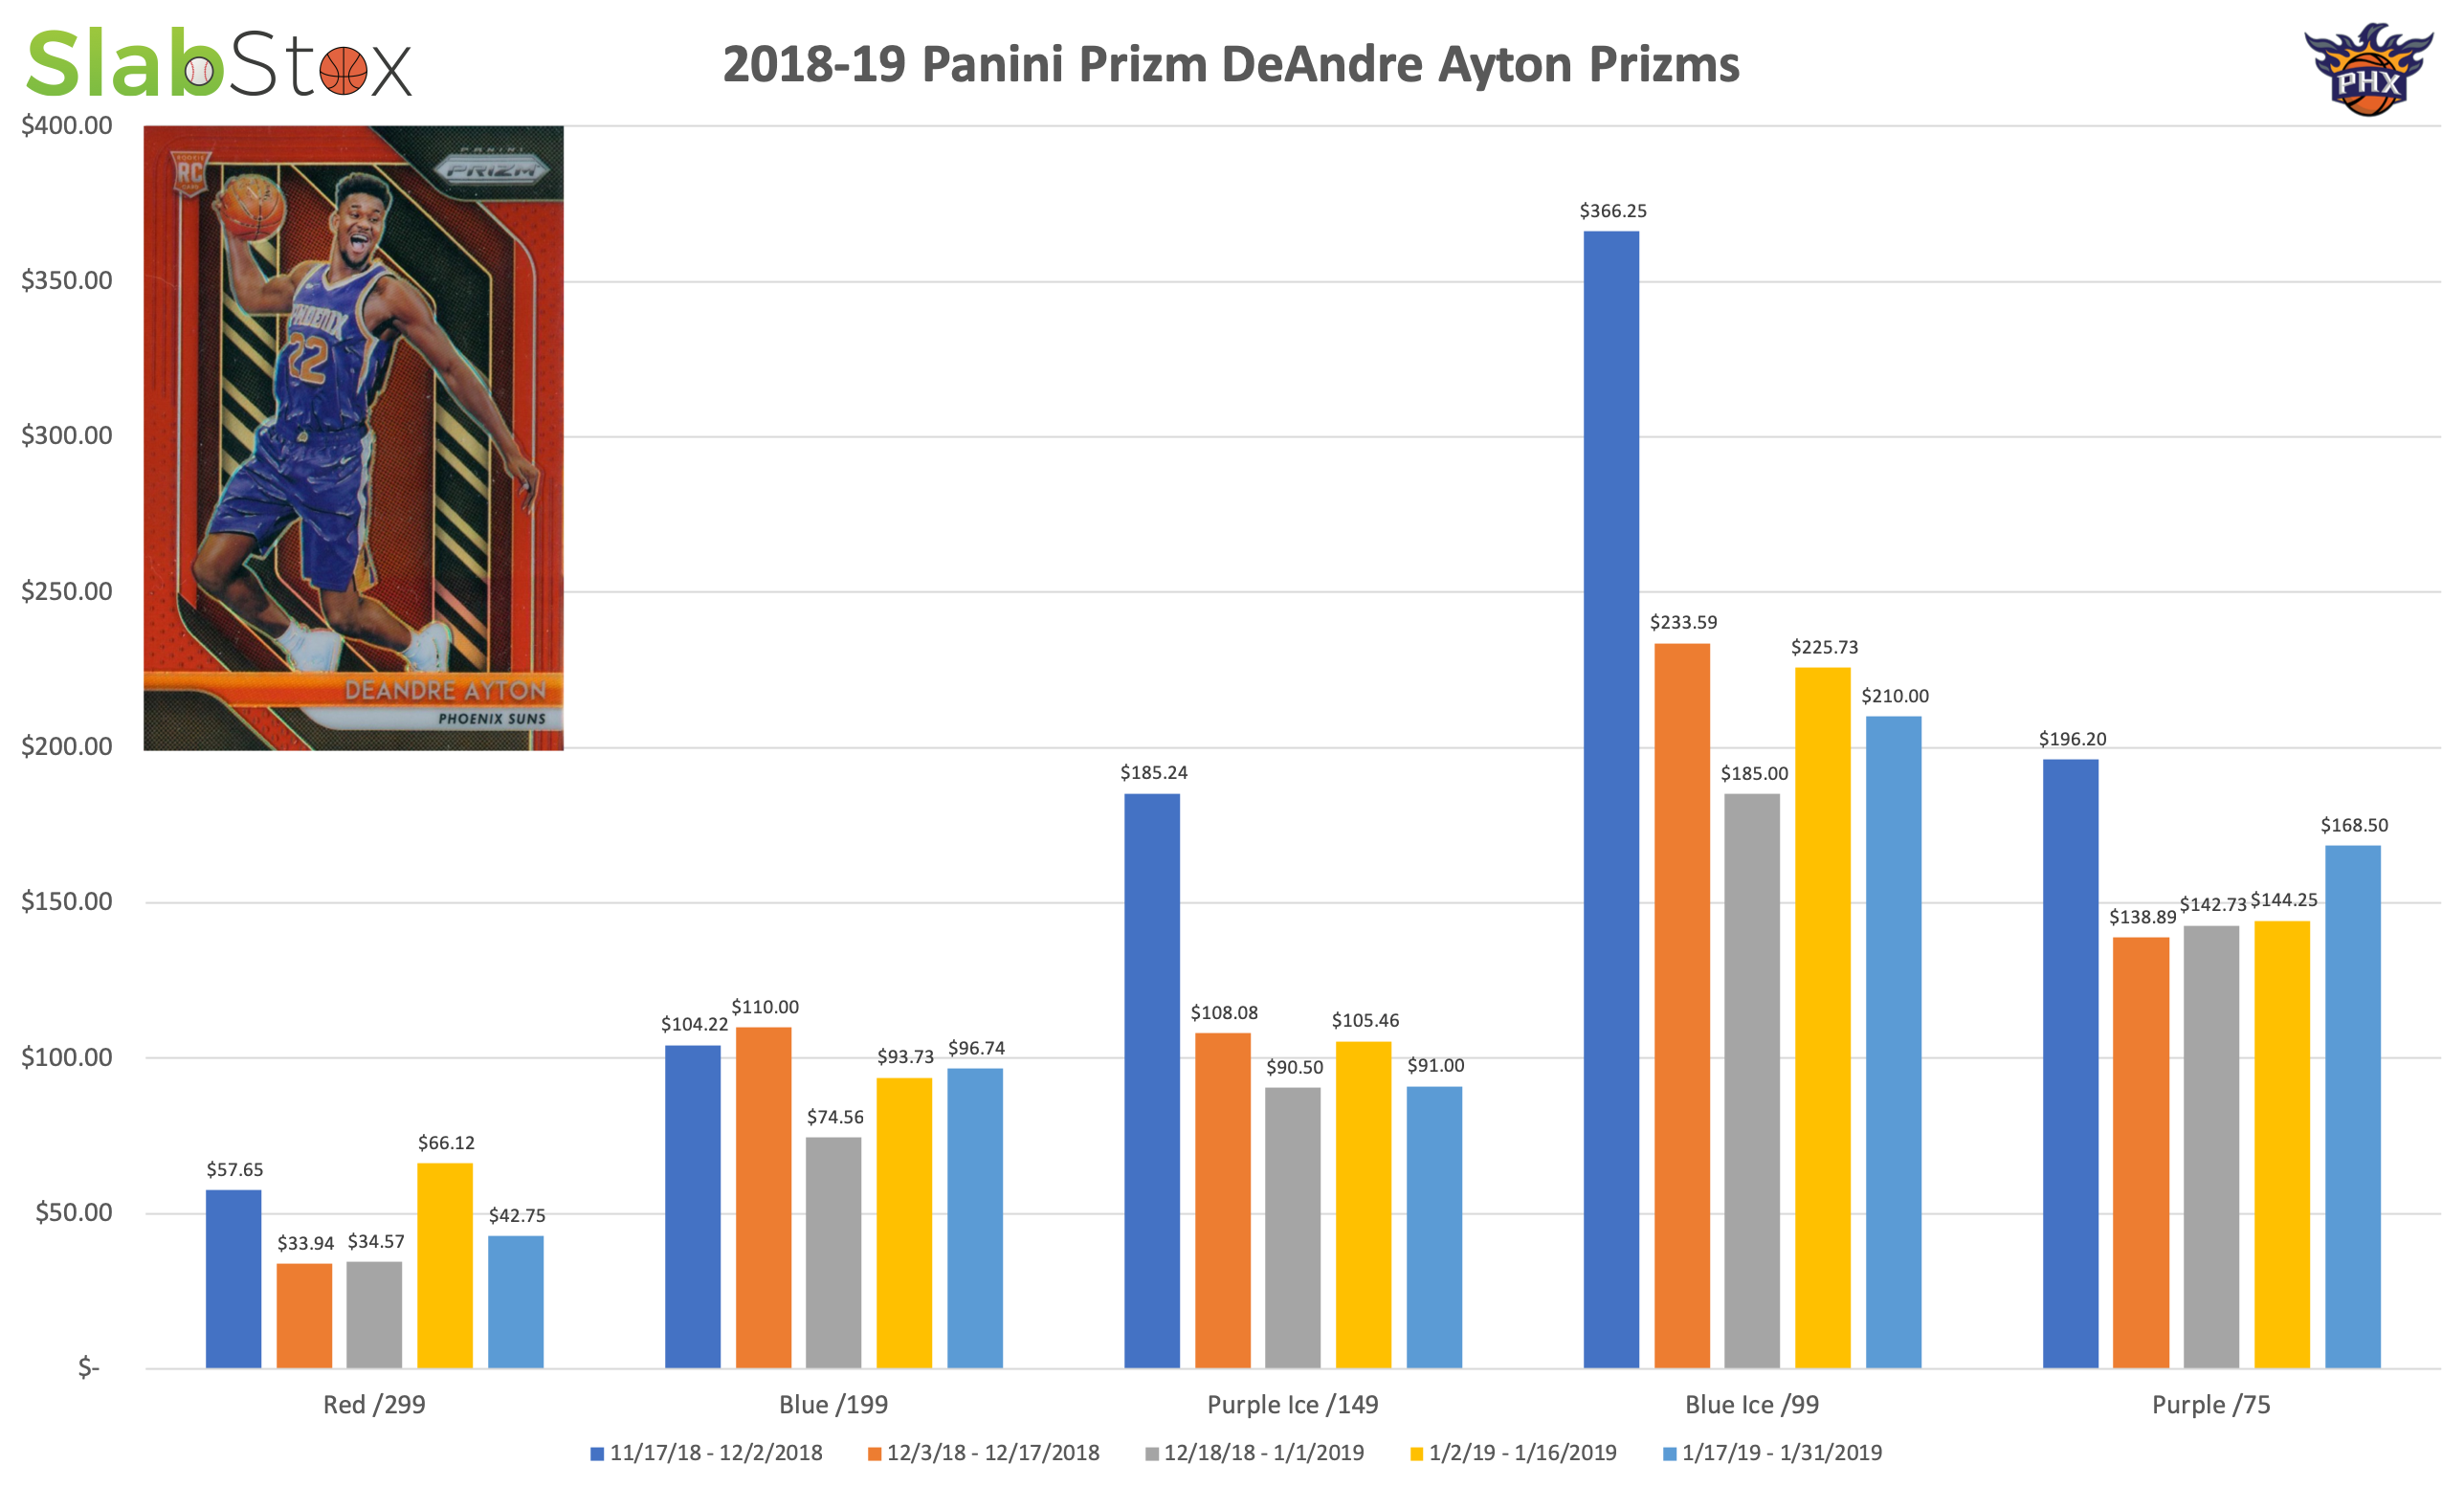 SlabStox infographic for 2018-19 Panini Prizm DeAndre Ayton Prizms sports trading card